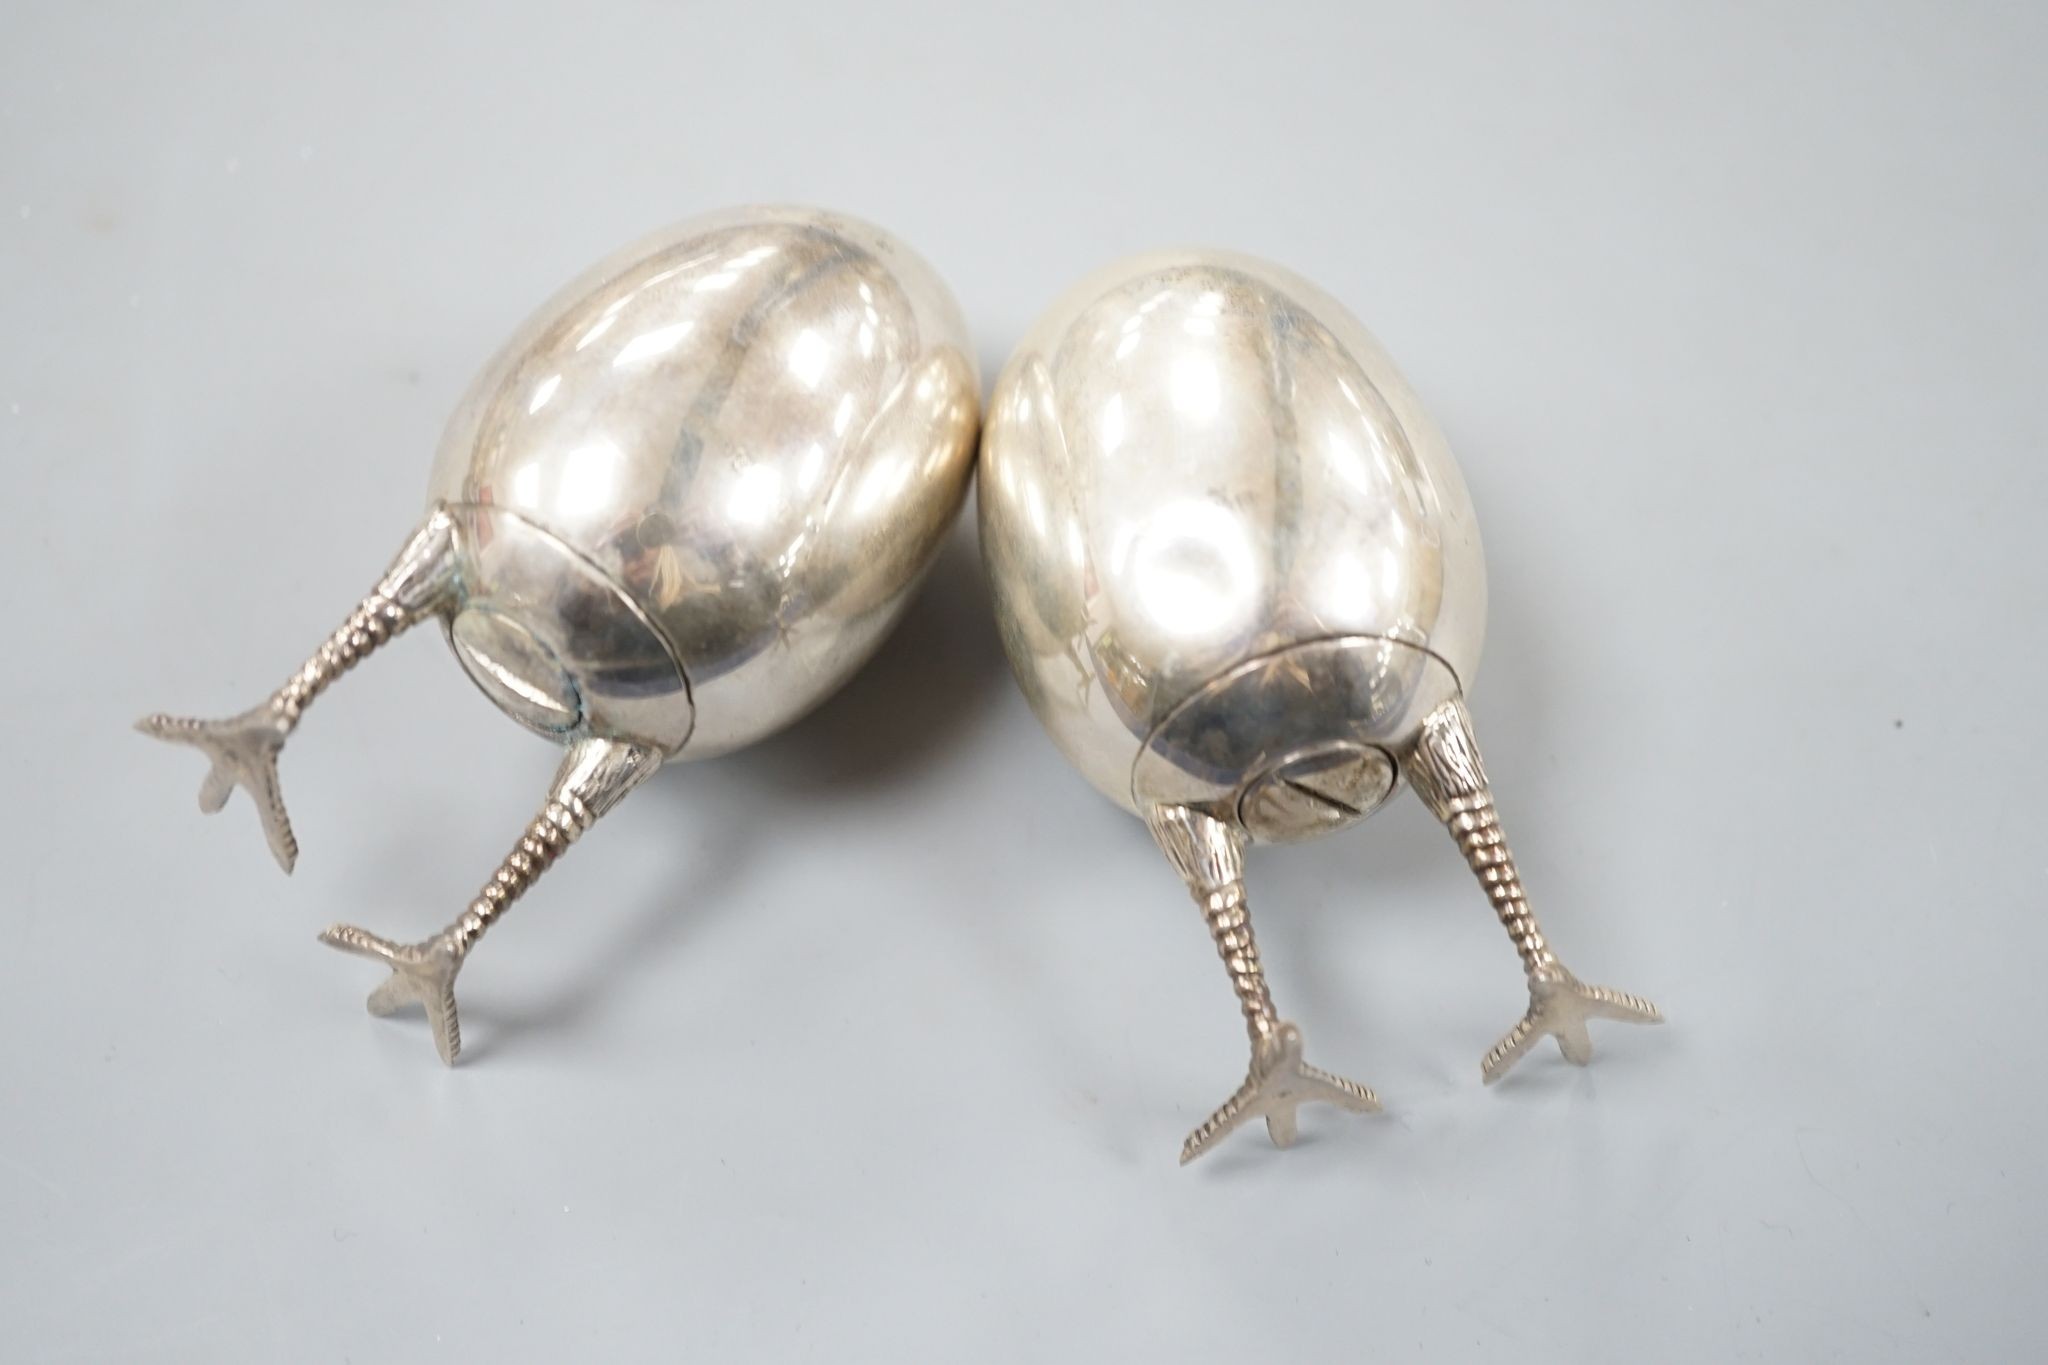 A pair of modern silver eggs on legs pepper and salt condiments, Francis Howard Ltd, London, 2015, 76mm, 124 grams.